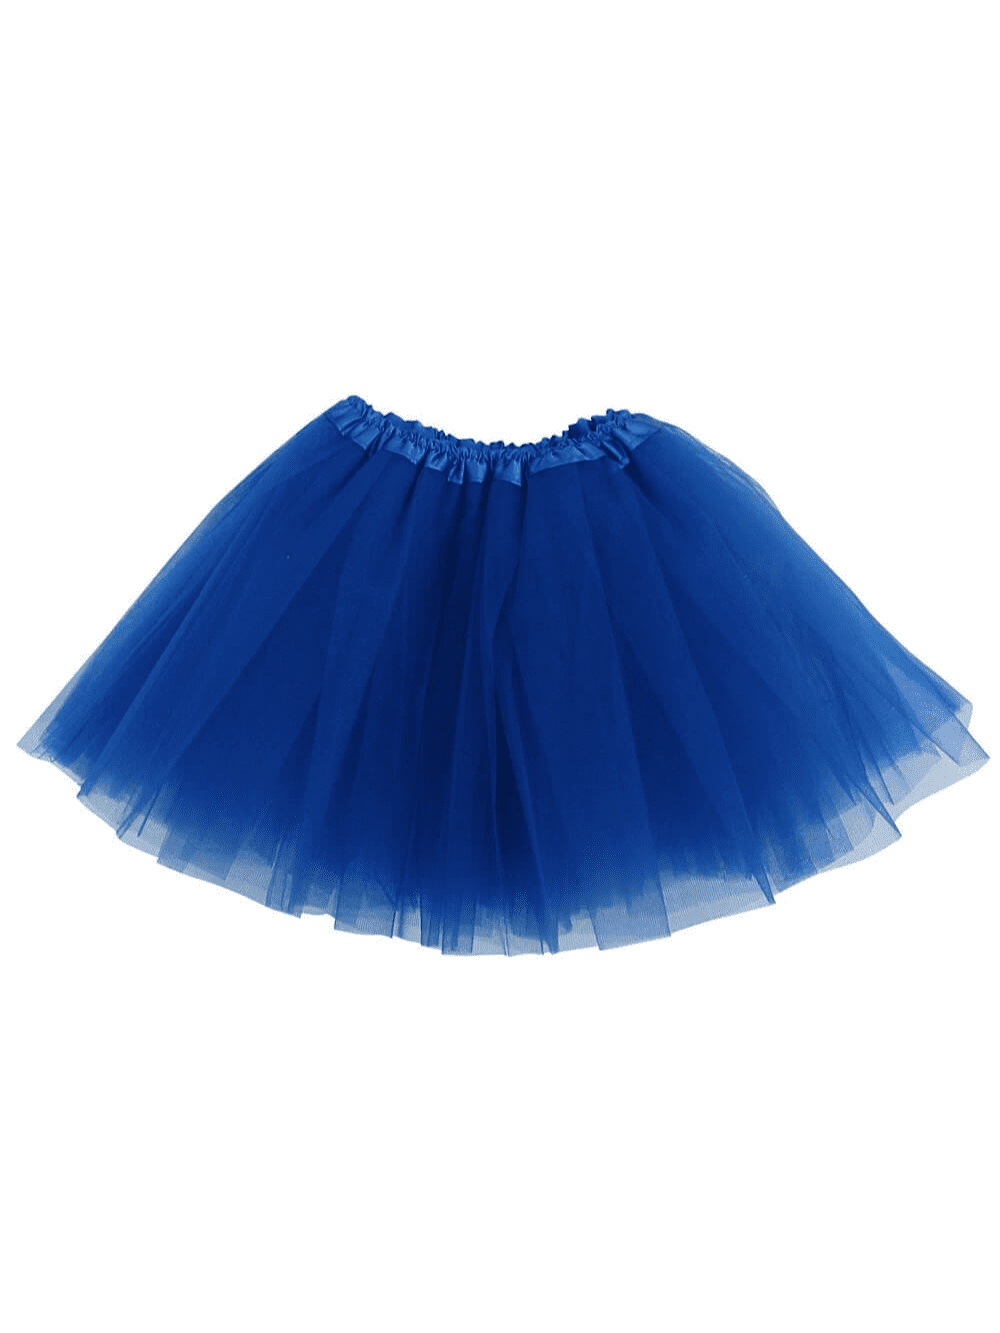 Tutu Skirt Fancy Dress Costume Halloween Women Teens Ice Queen White Blue Party 